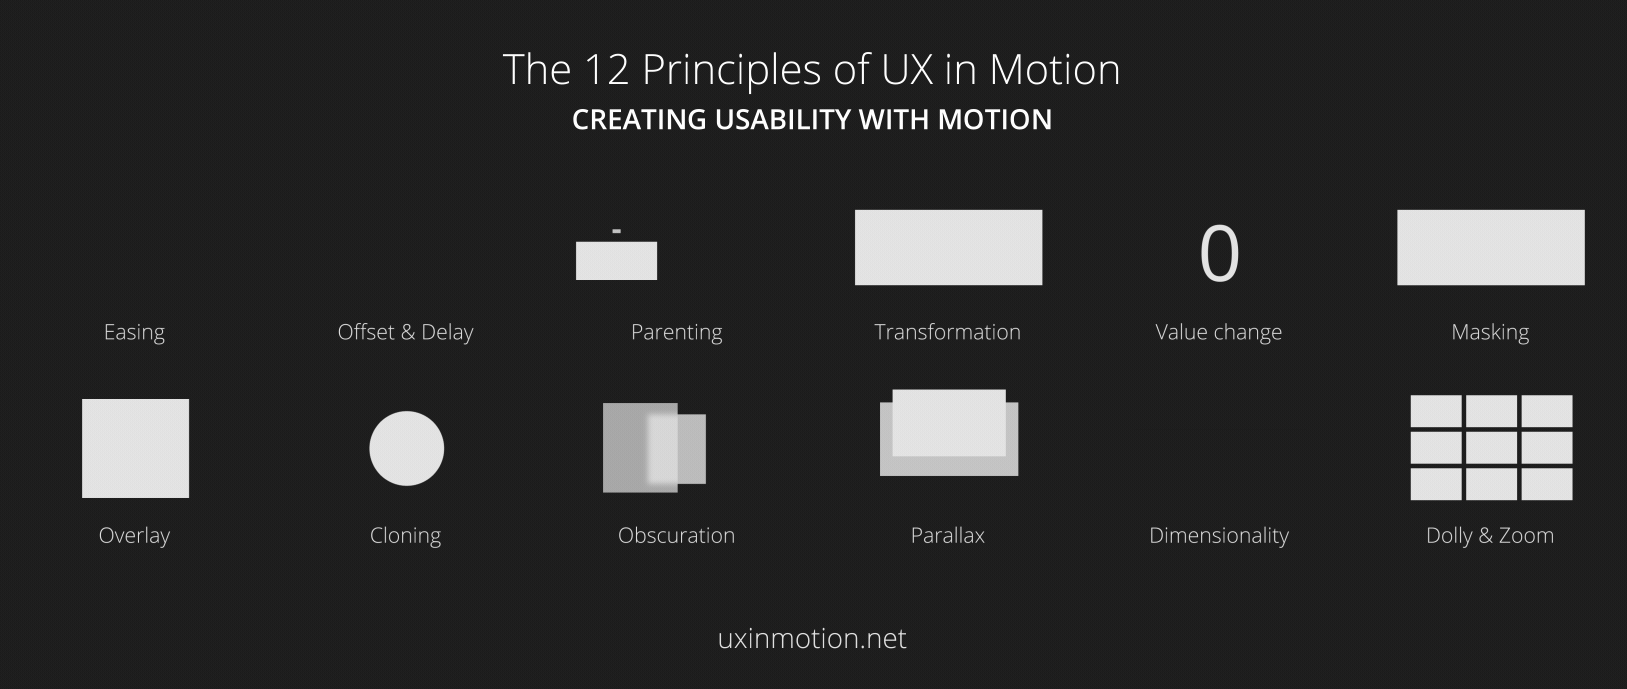 ux-in-motion